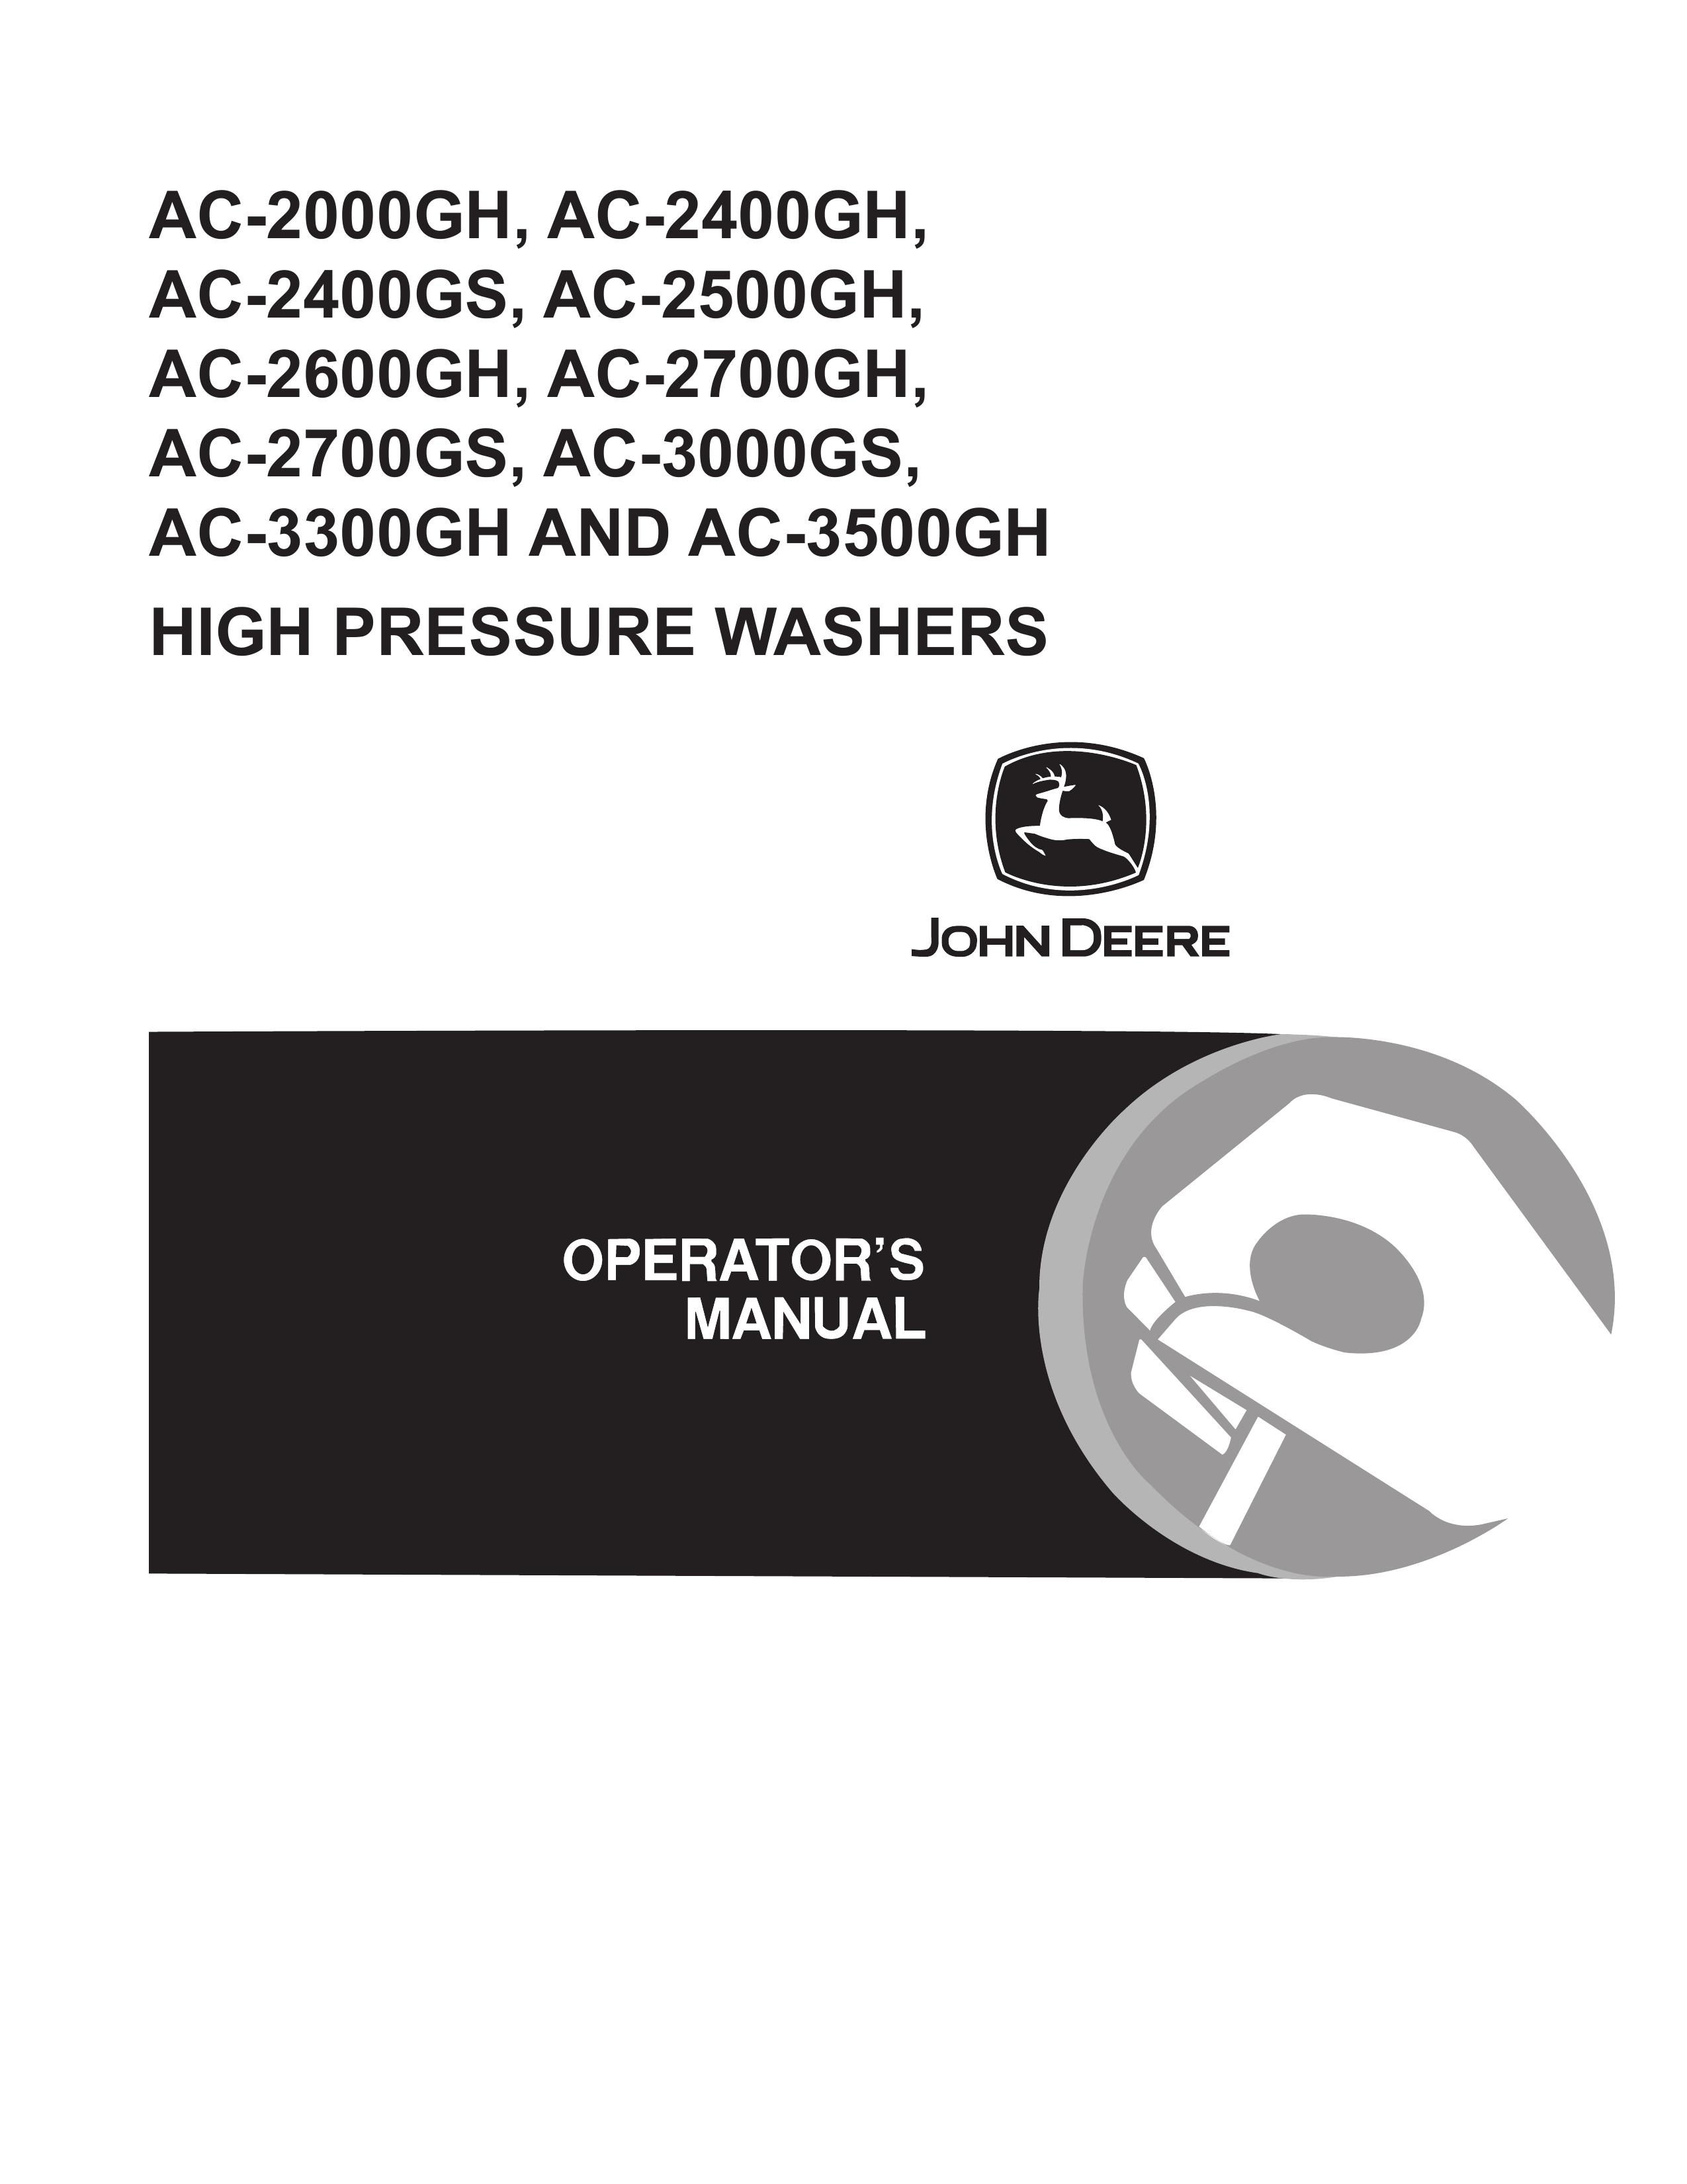 John Deere AC-2400GS Washer User Manual